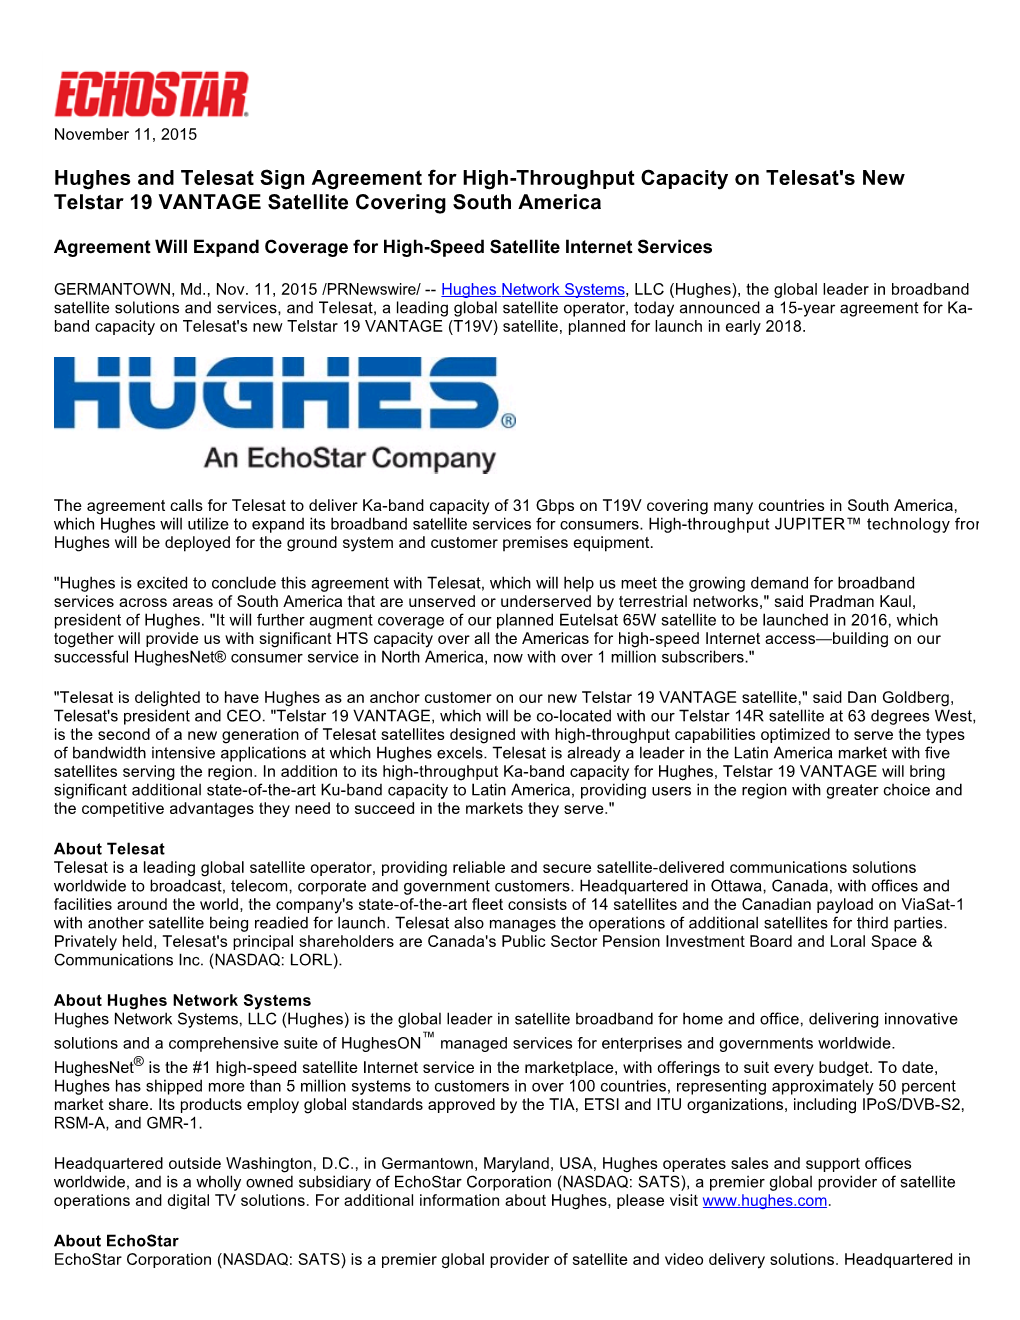 Hughes and Telesat Sign Agreement for High-Throughput Capacity on Telesat's New Telstar 19 VANTAGE Satellite Covering South America